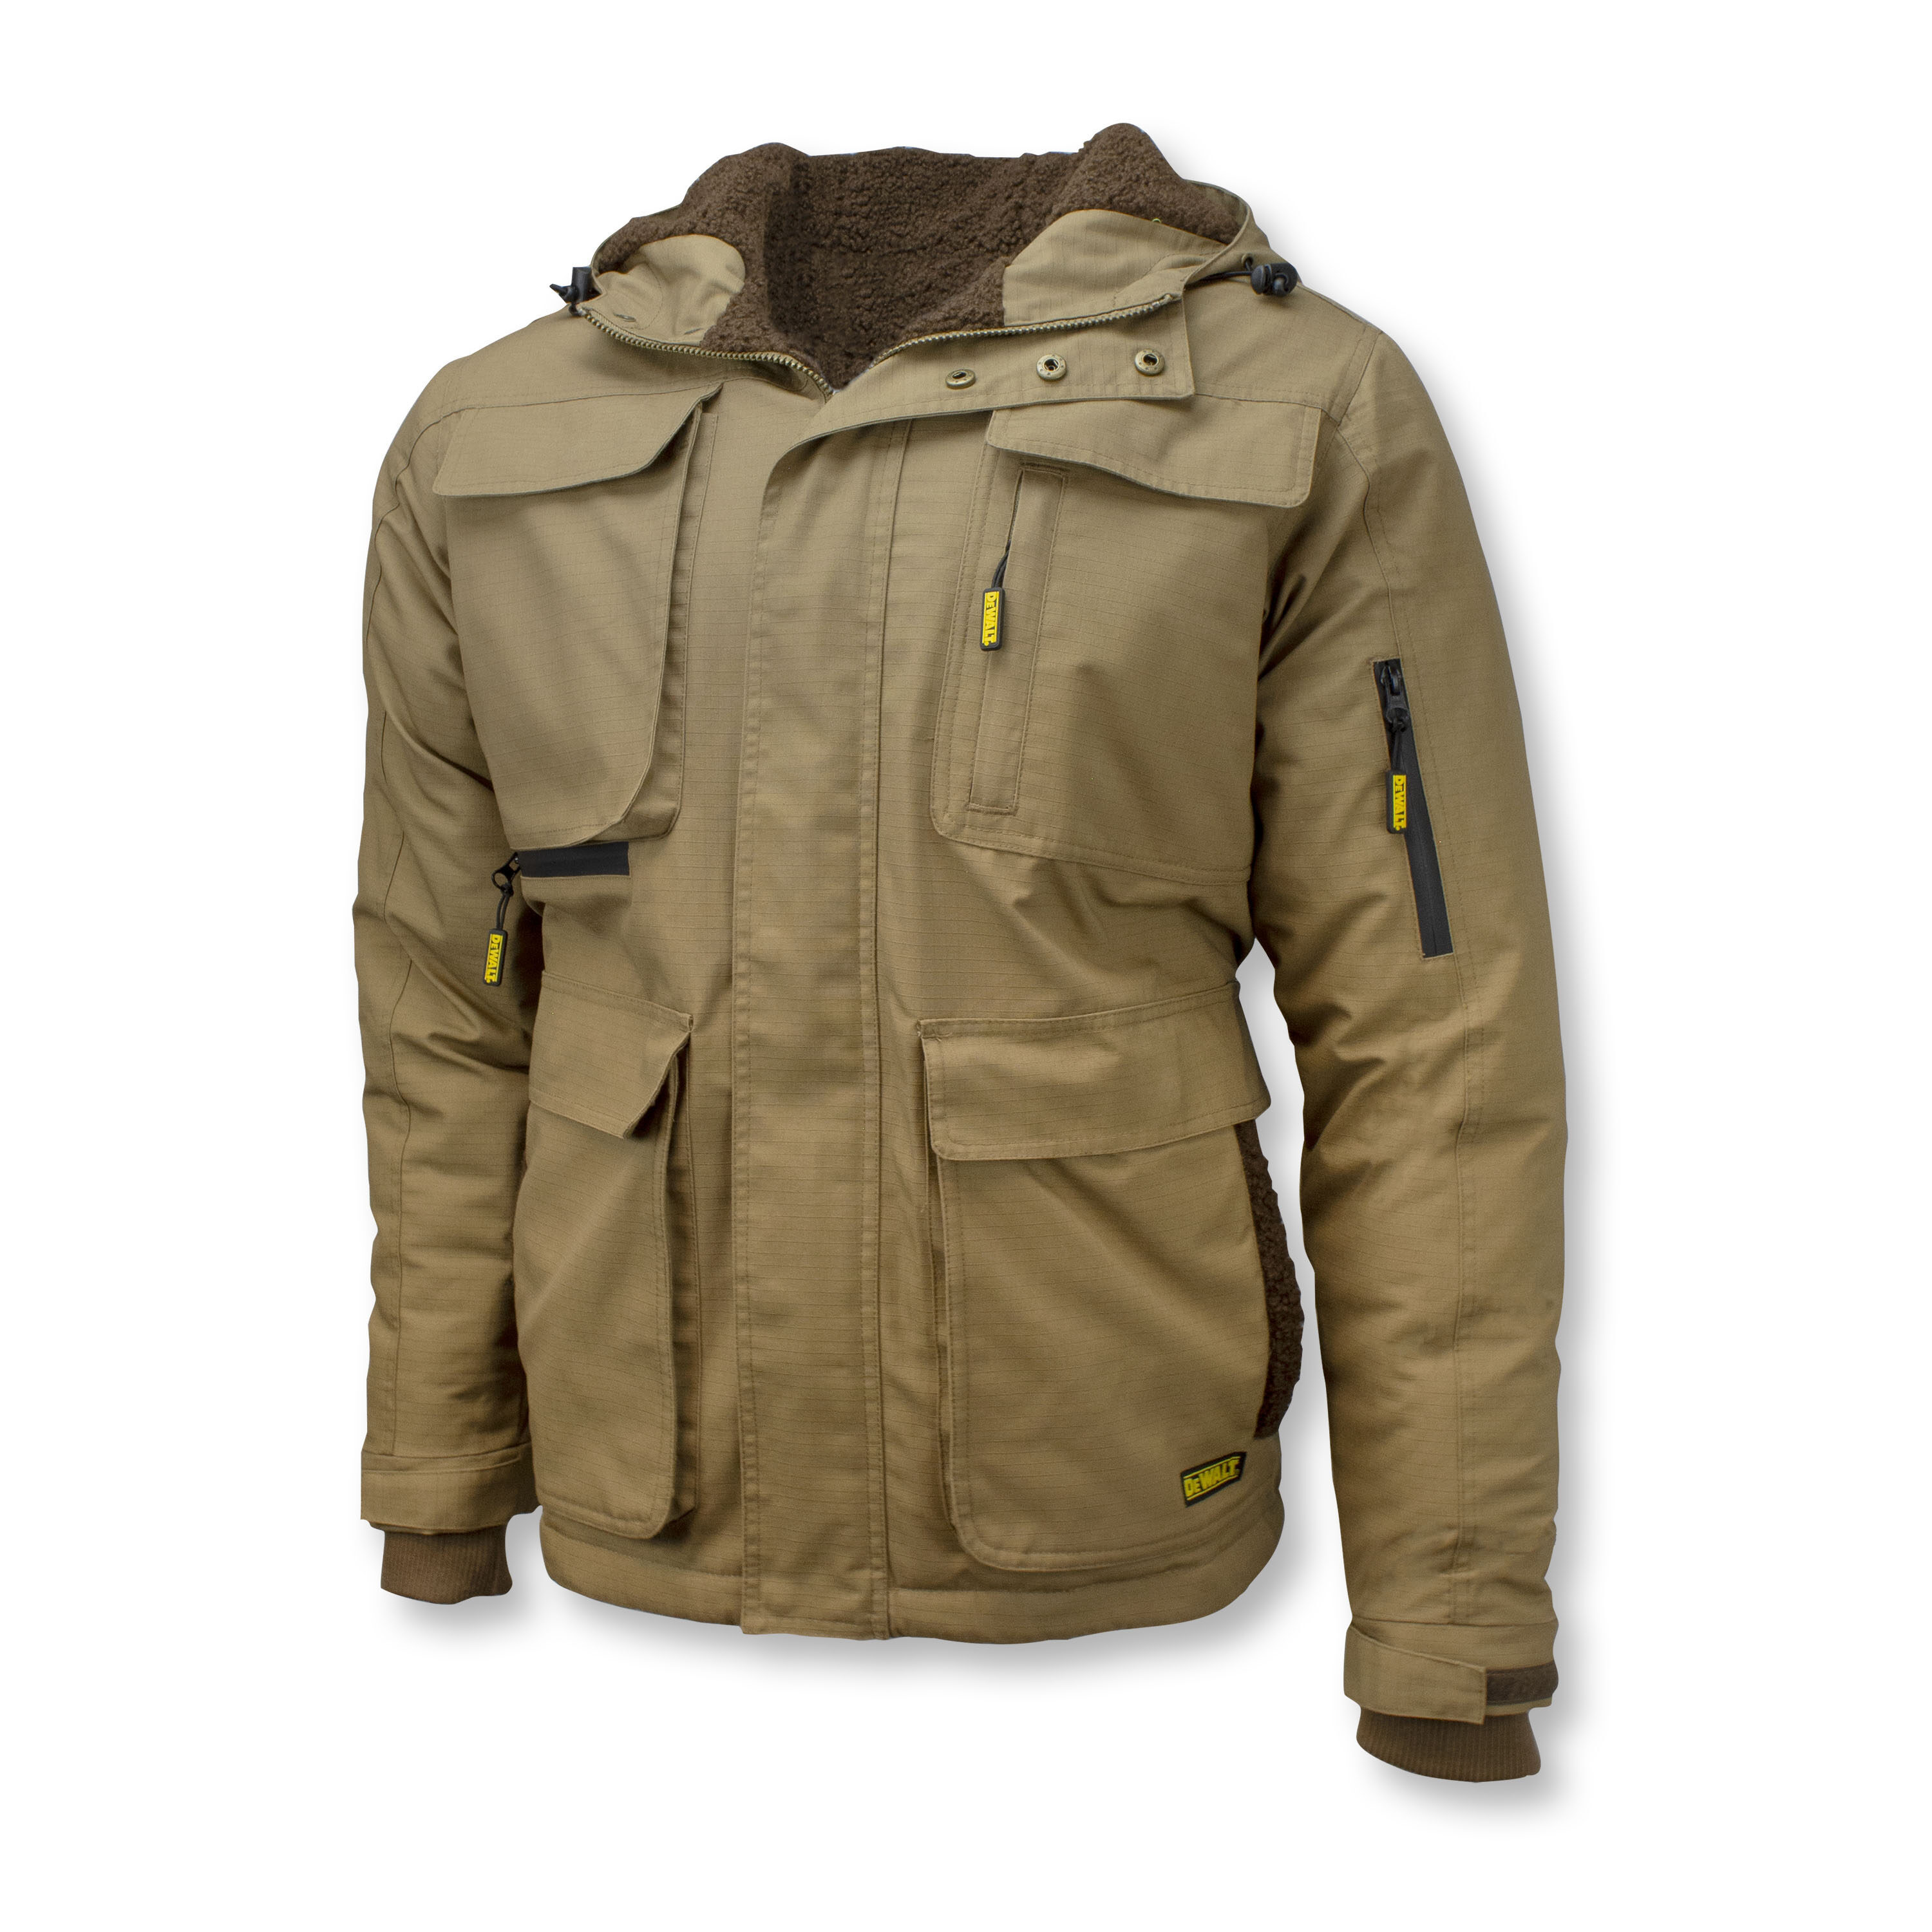 DEWALT Tan Cotton/Polyester Heated Jacket (Xl) in the Work Jackets ...